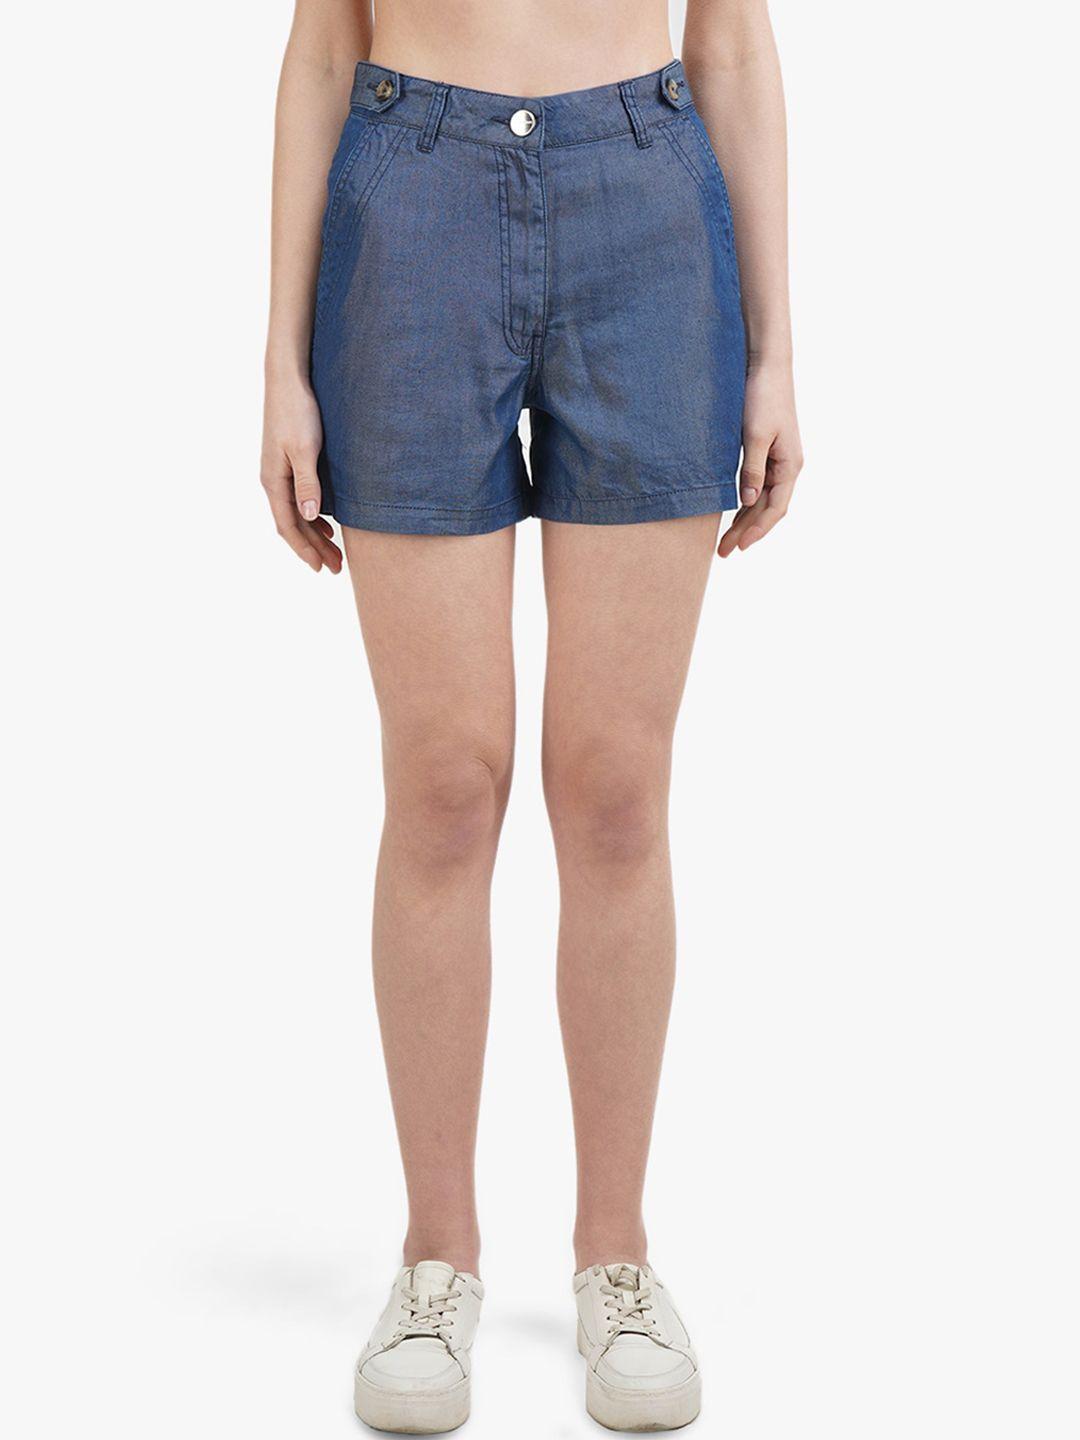 united colors of benetton women navy blue low-rise denim shorts